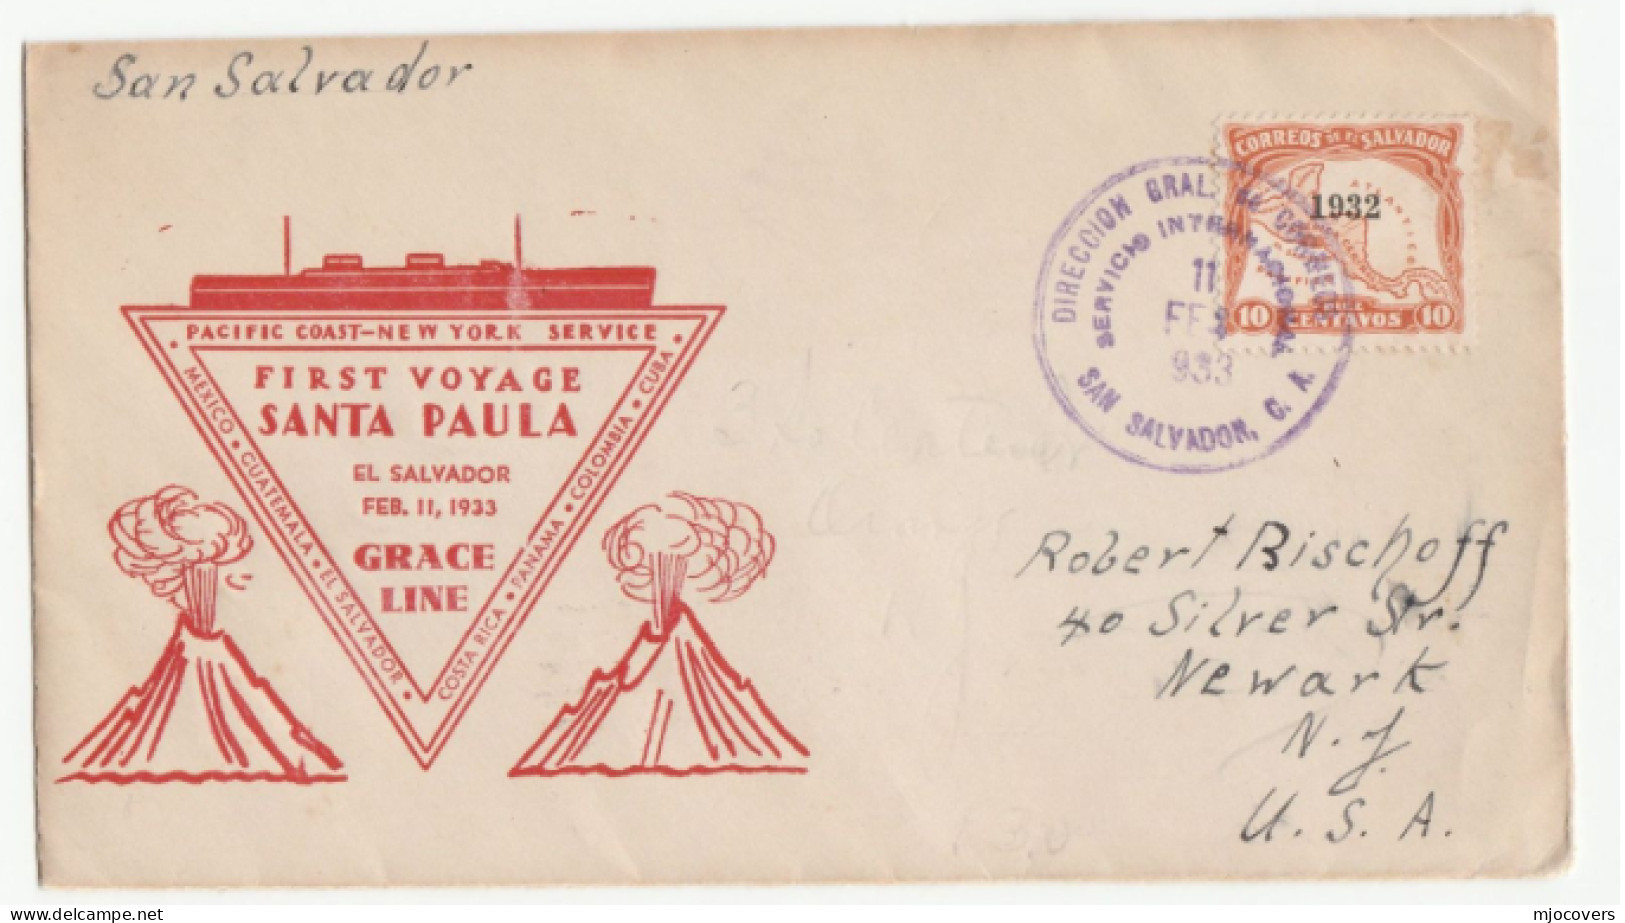 ERUPTING  VOLCANO 1933 Pacific Coast EL SALVADOR  First VOYAGE Ship SANTA PAULA  Grace Line To USA Cover Stamps - Vulkane